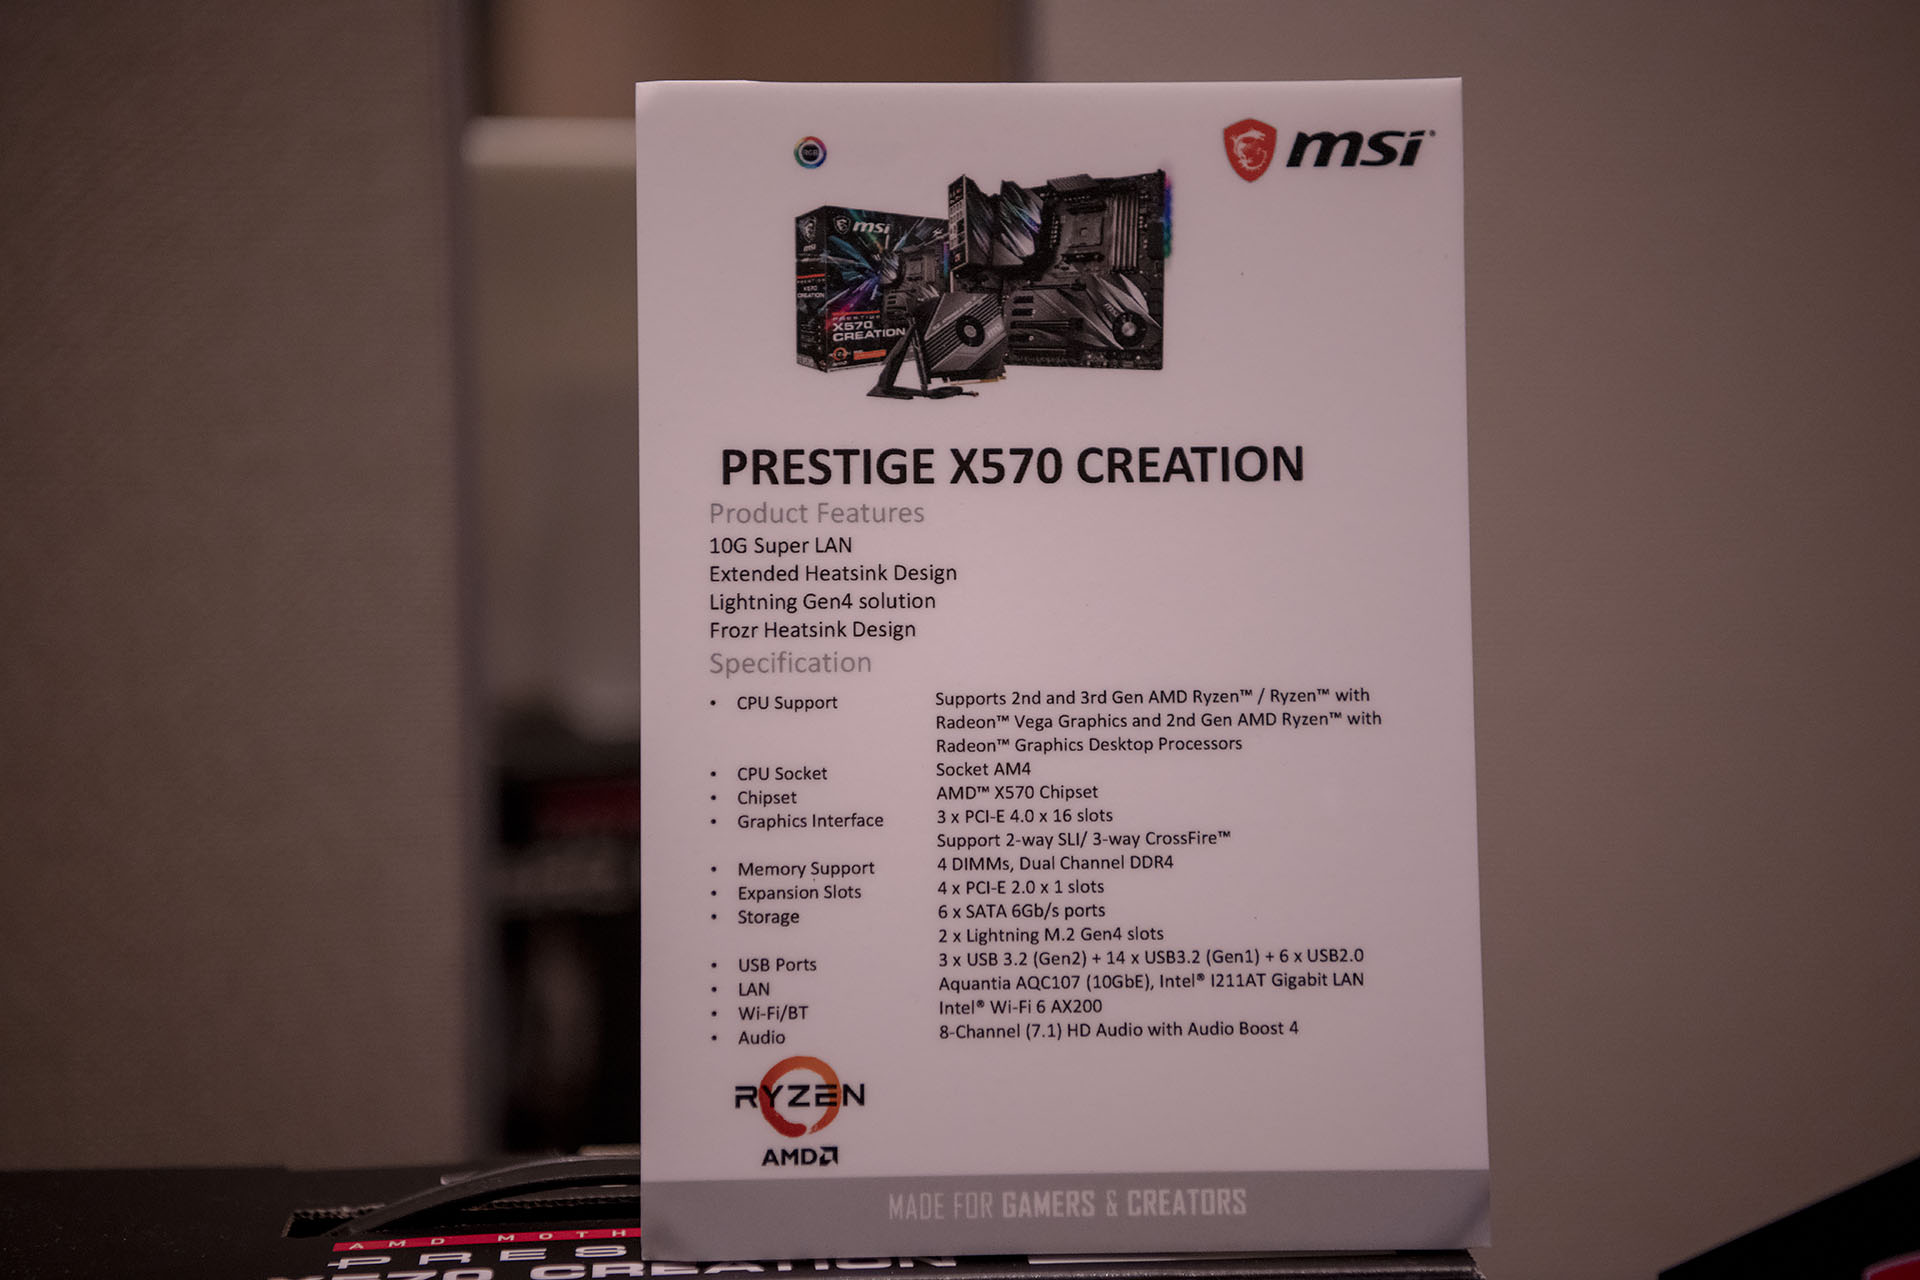 dsc 4729 บรรยากาศงาน MSI Indo Pacific X570 Partner Convention พบการเปิดตัวเมนบอร์ด X570 รุ่นใหม่ล่าสุดจากทาง MSI ต้อนรับการมาของซีพียู AMD RYZEN 3000ซีรี่ย์ 